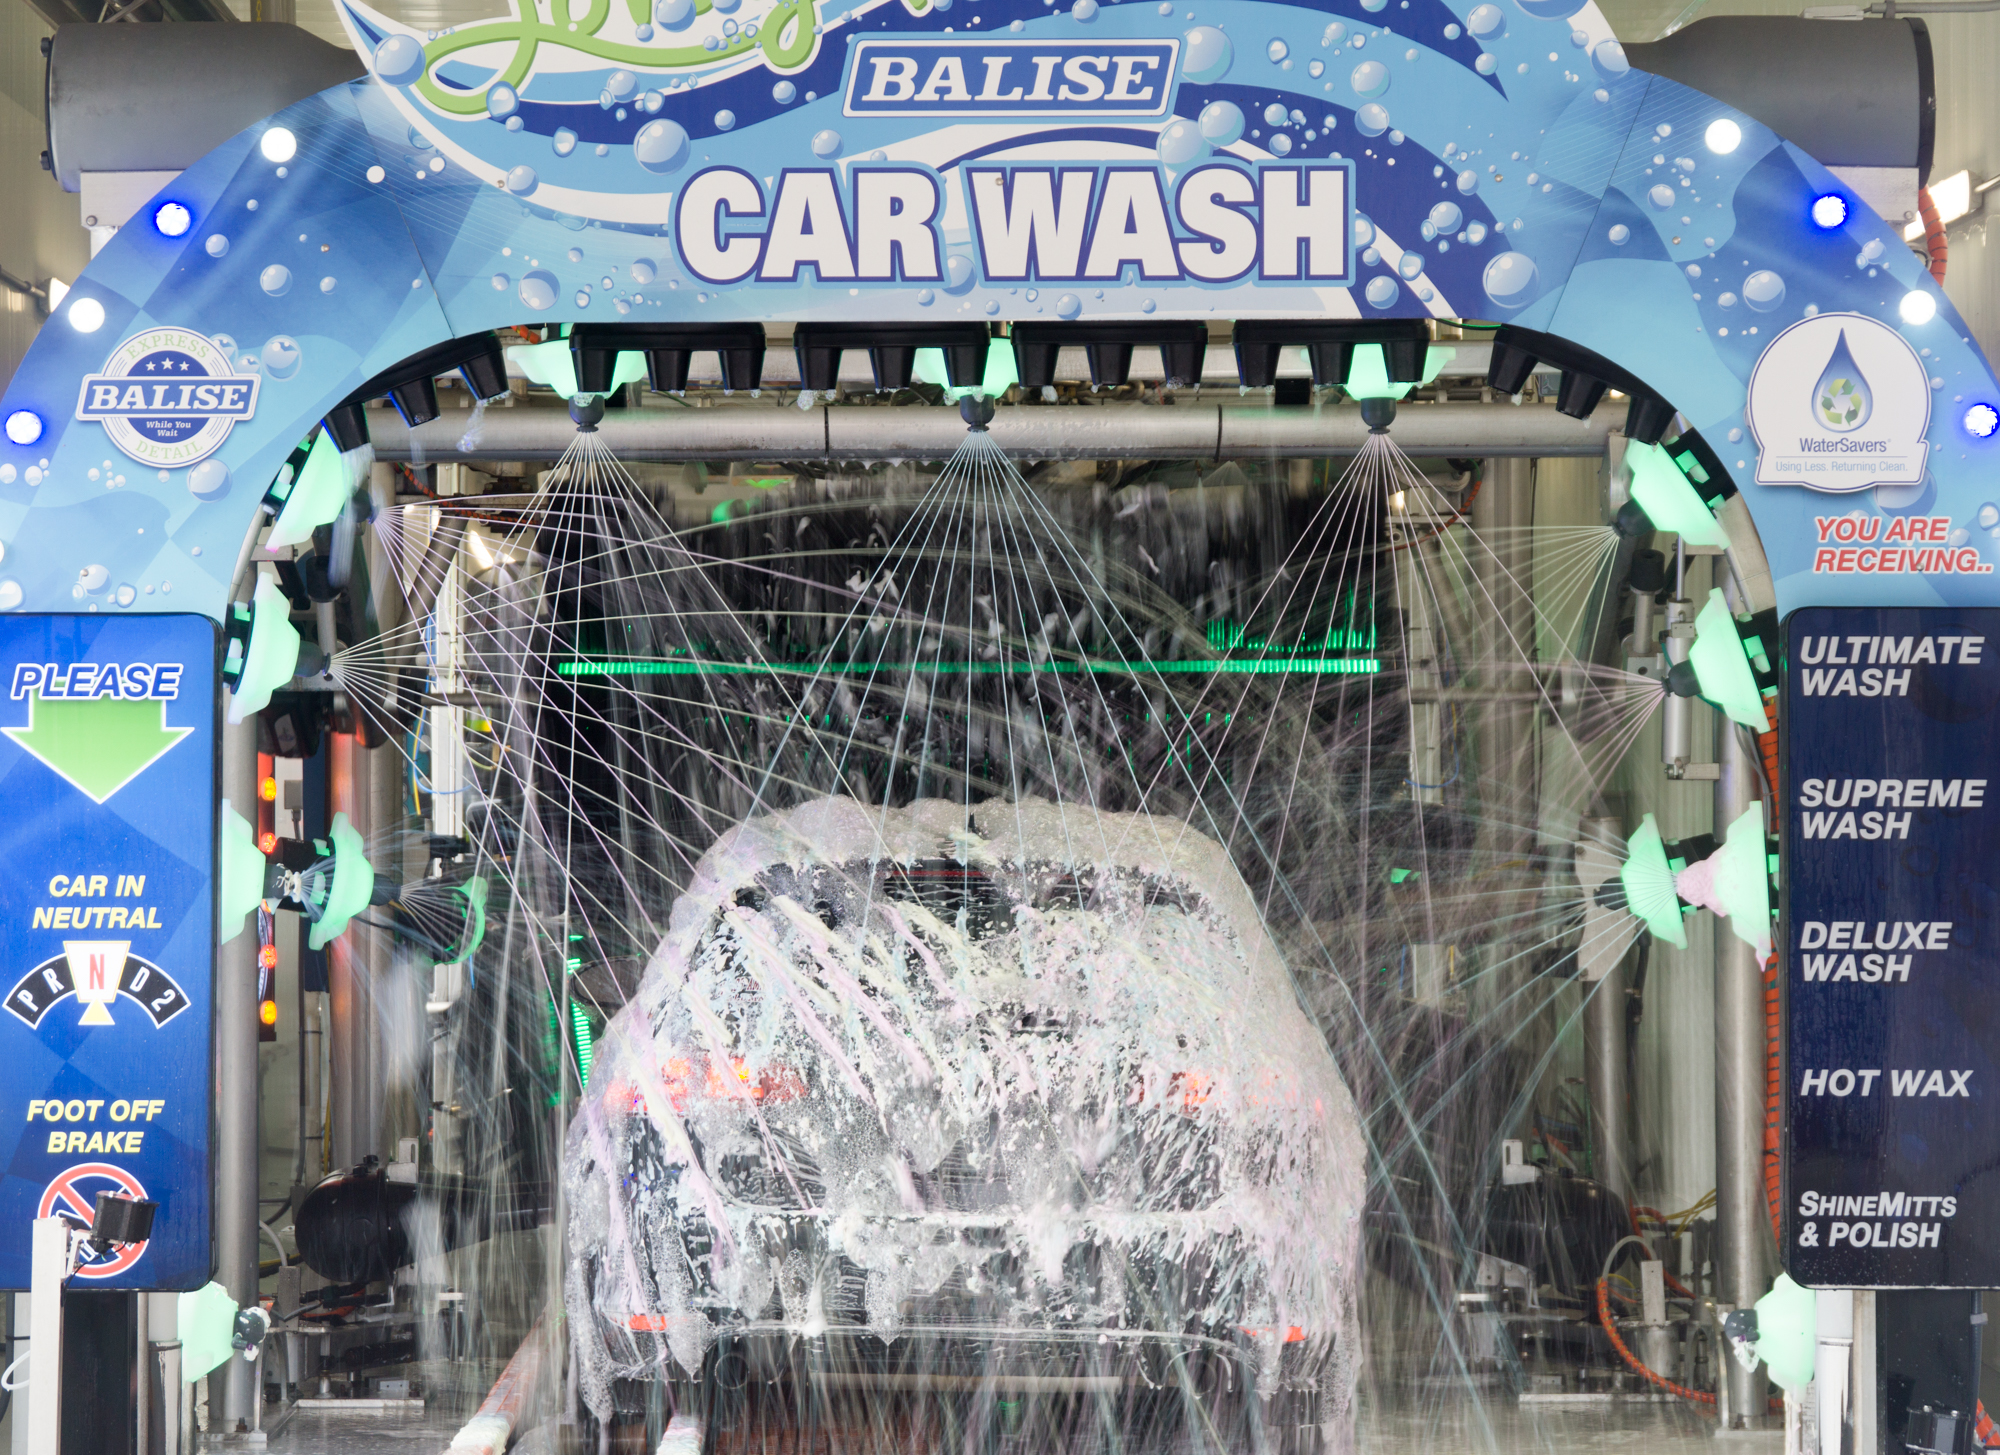 Balise Car Wash.